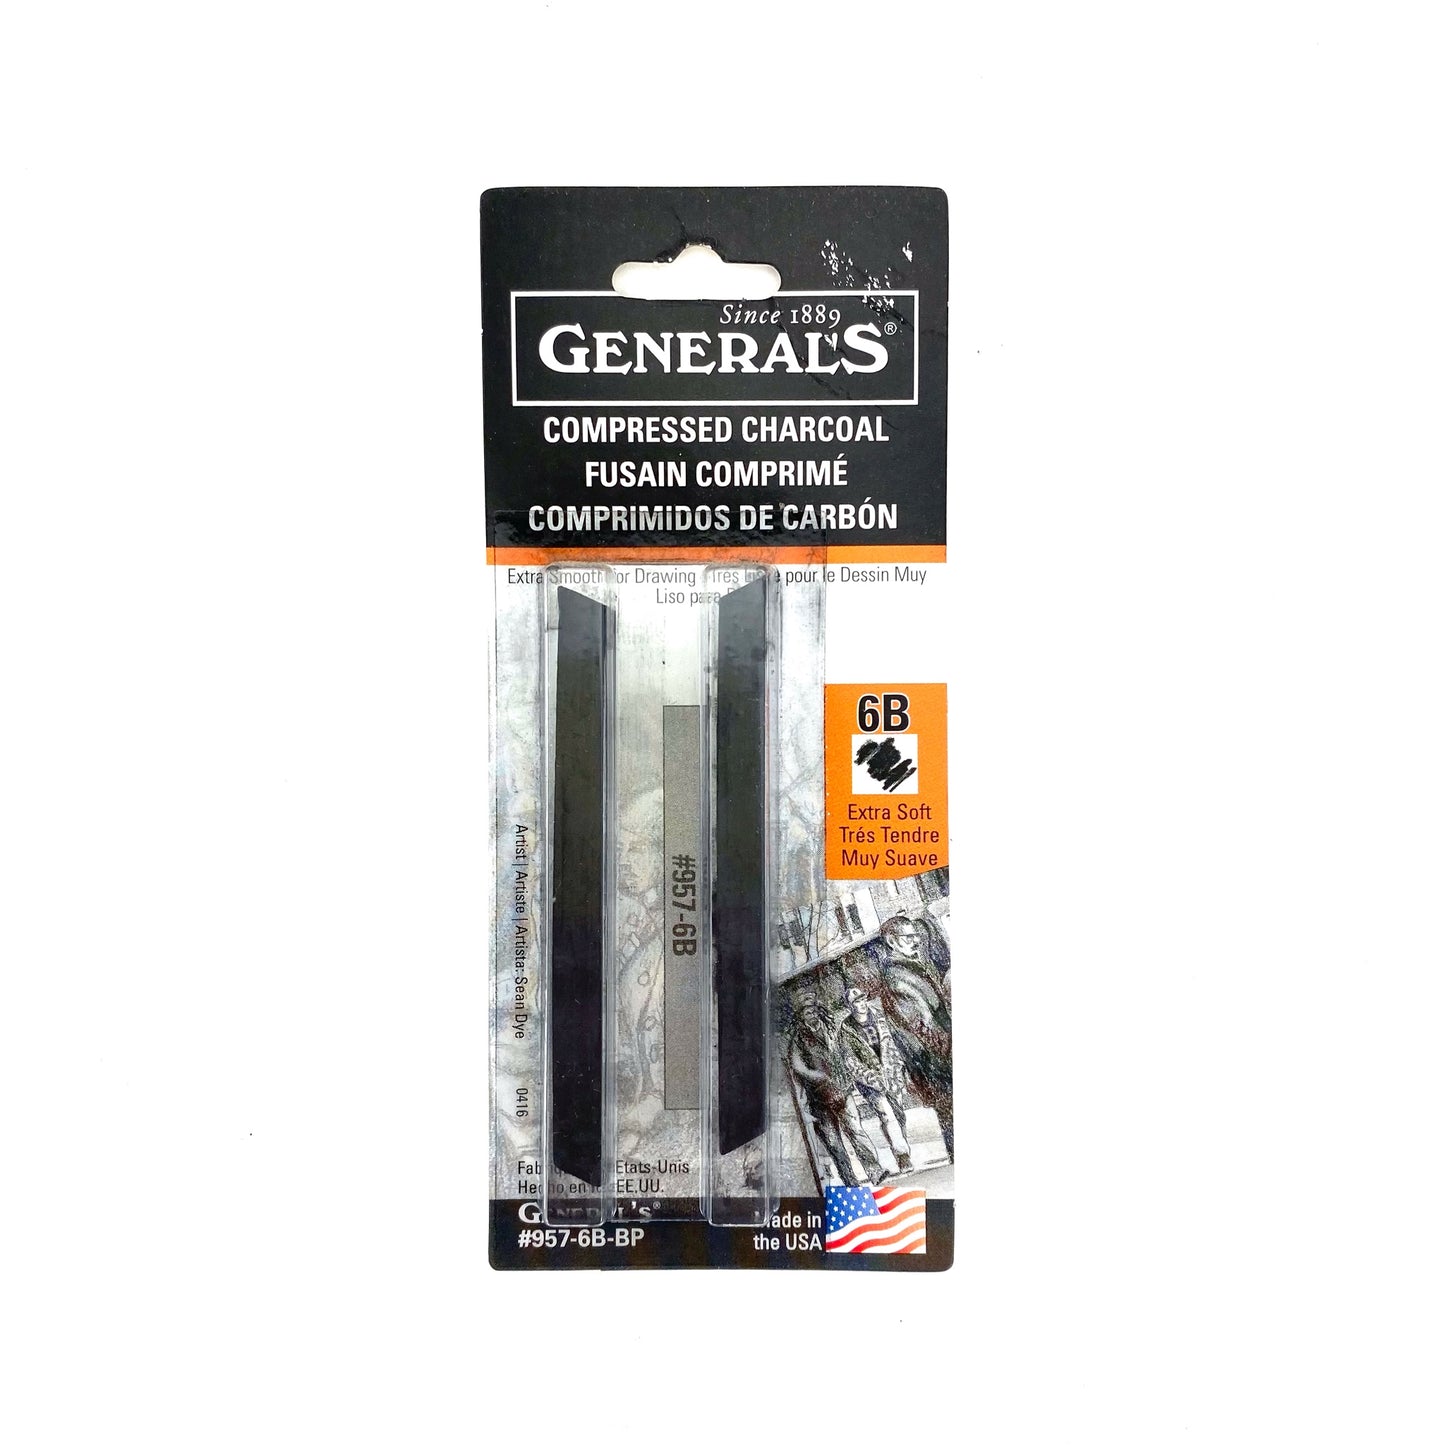 General's Compressed Black Charcoal Sets - 2 Pack - 6B Sticks by General's - K. A. Artist Shop